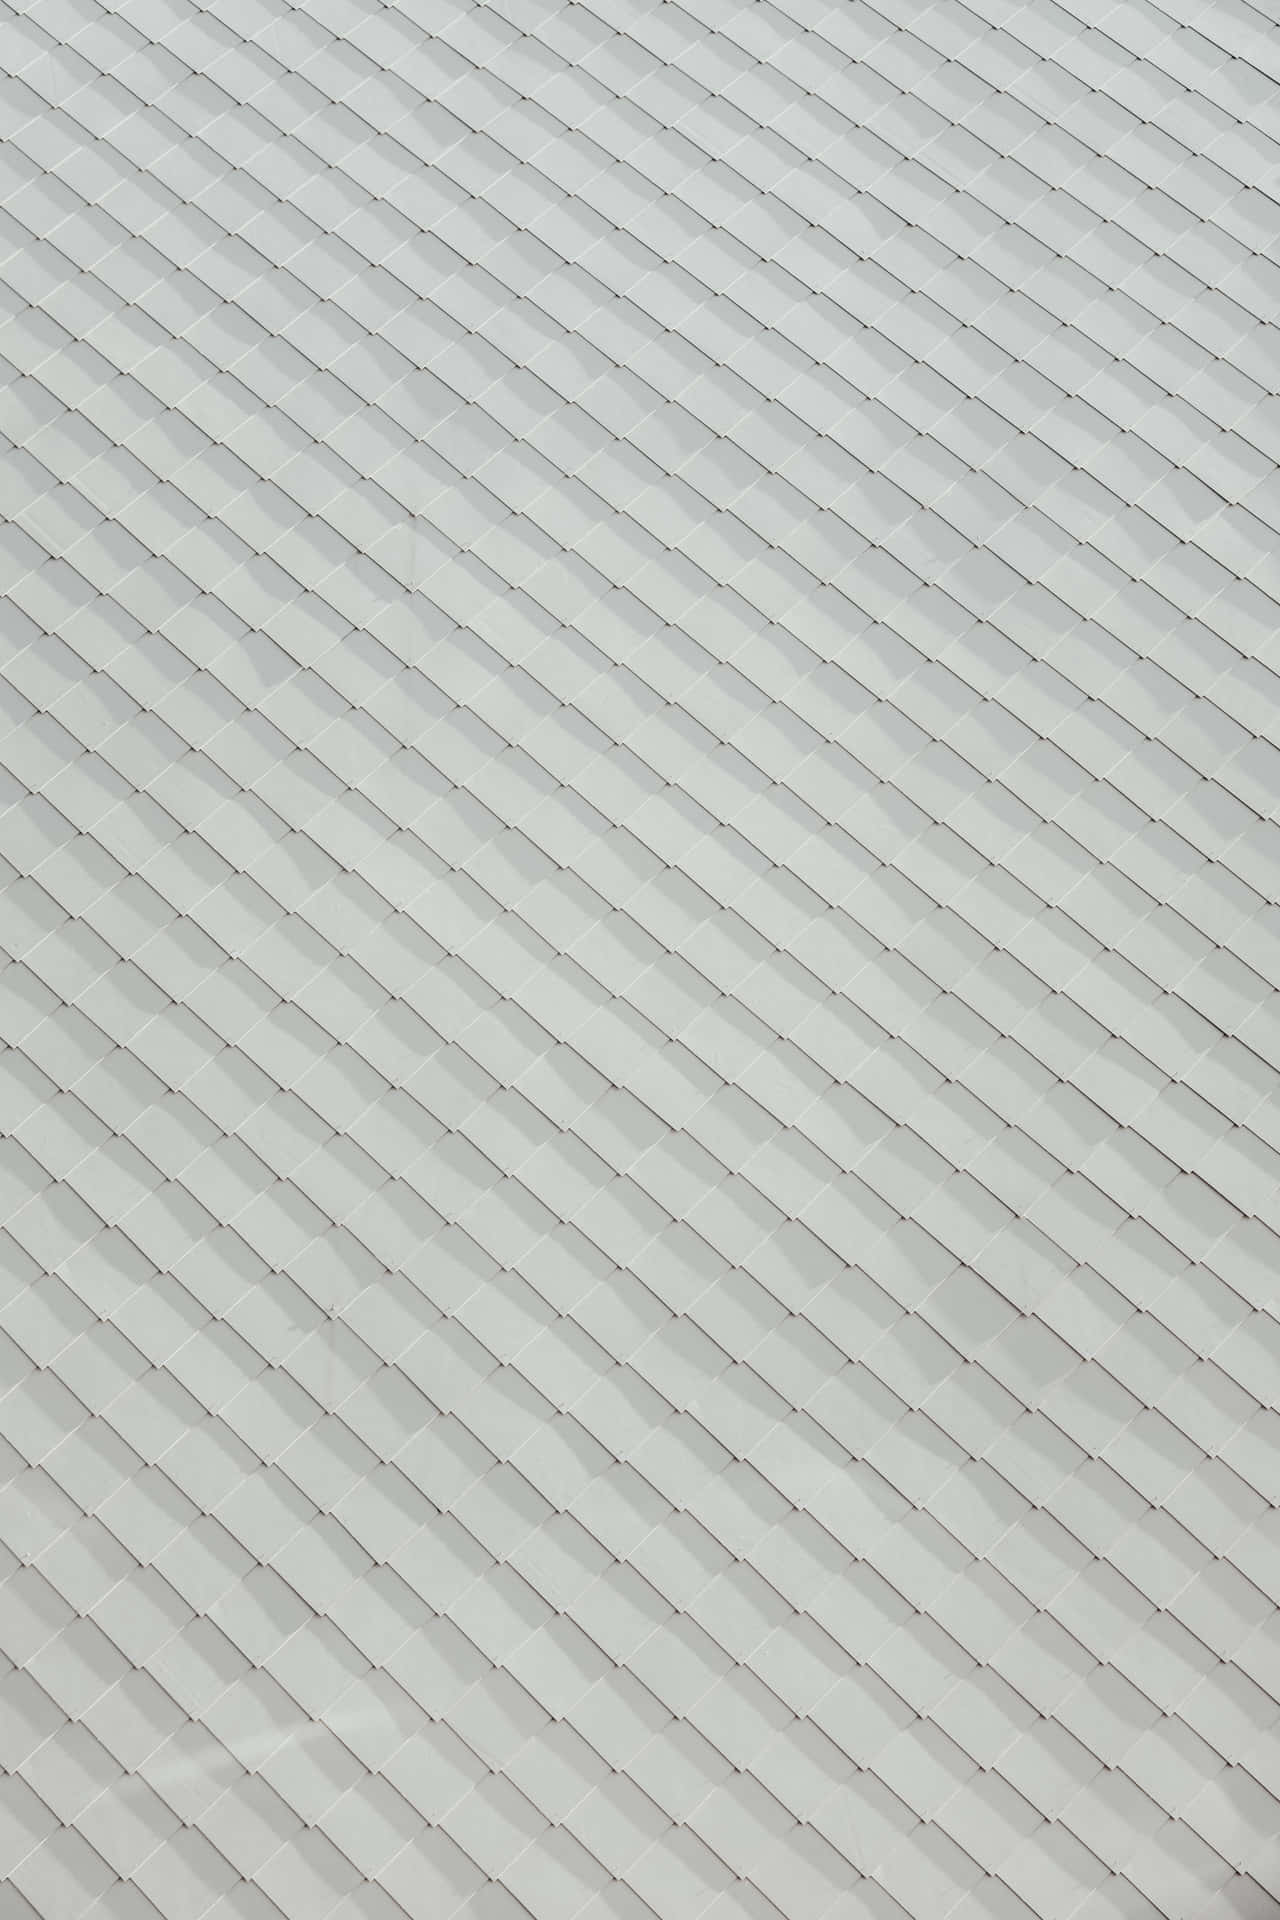 Repetitive Minimalist Lines [wallpaper] Wallpaper